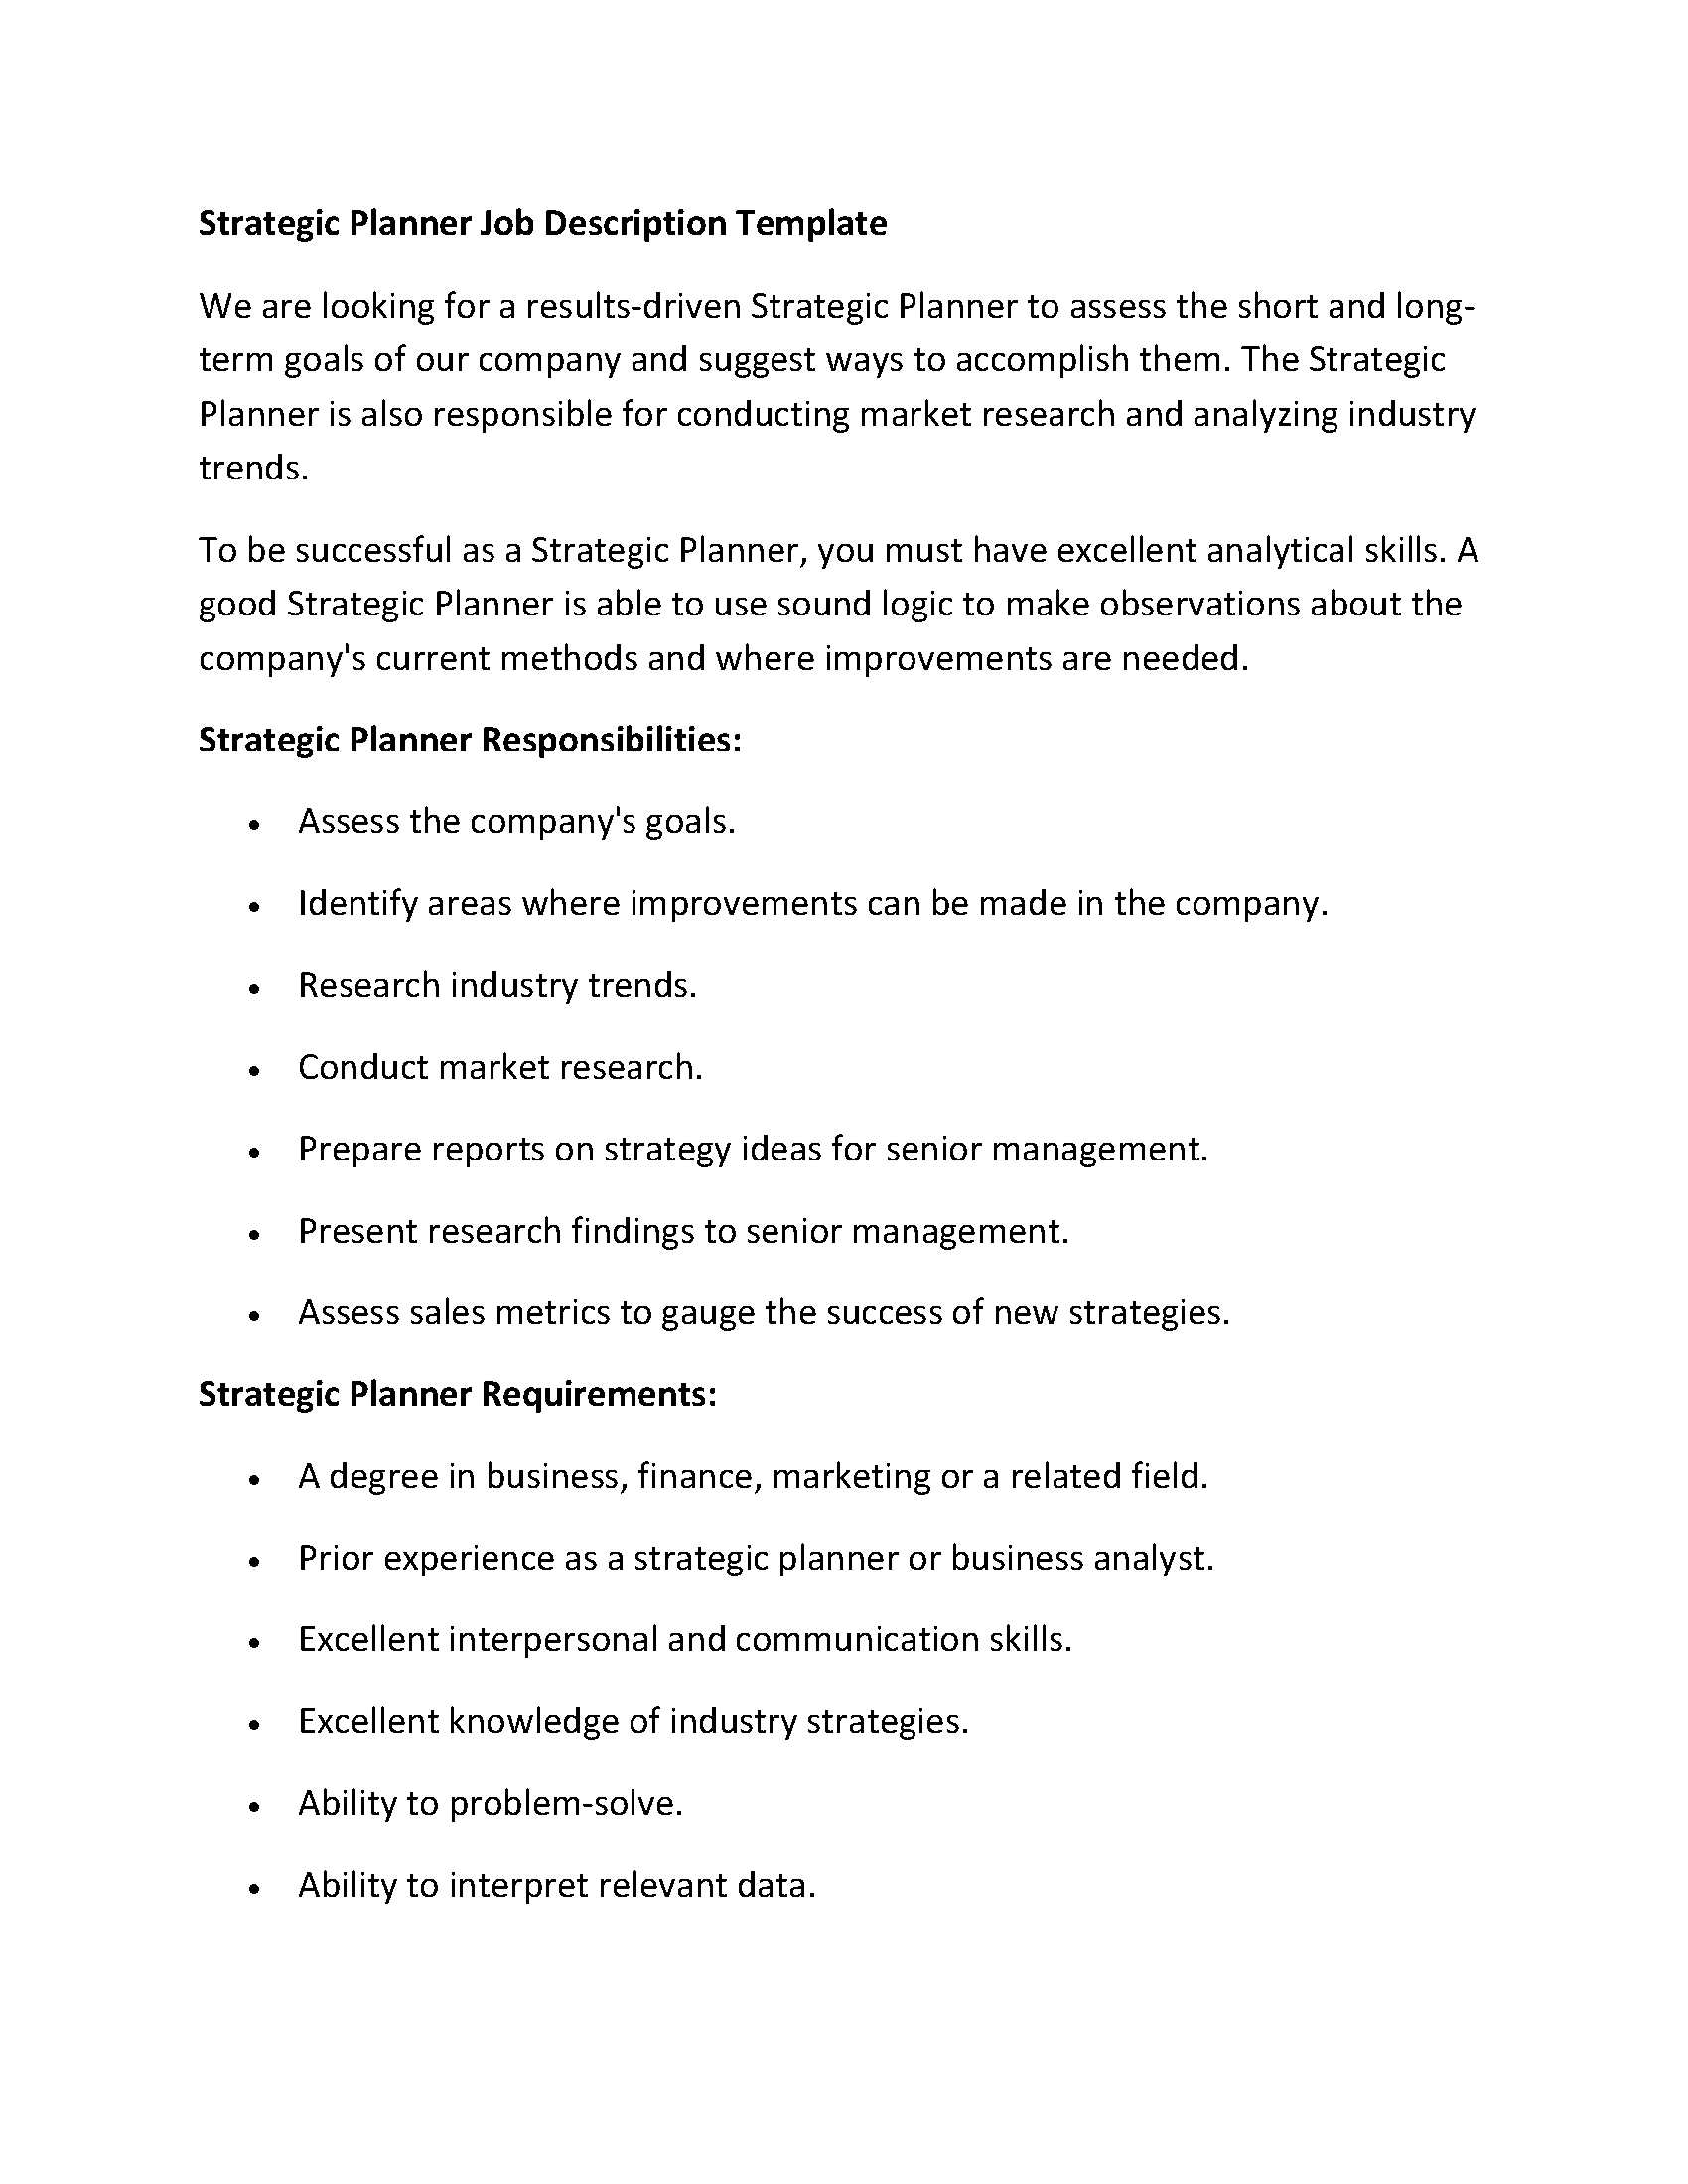 Strategic Planner Job Description Template